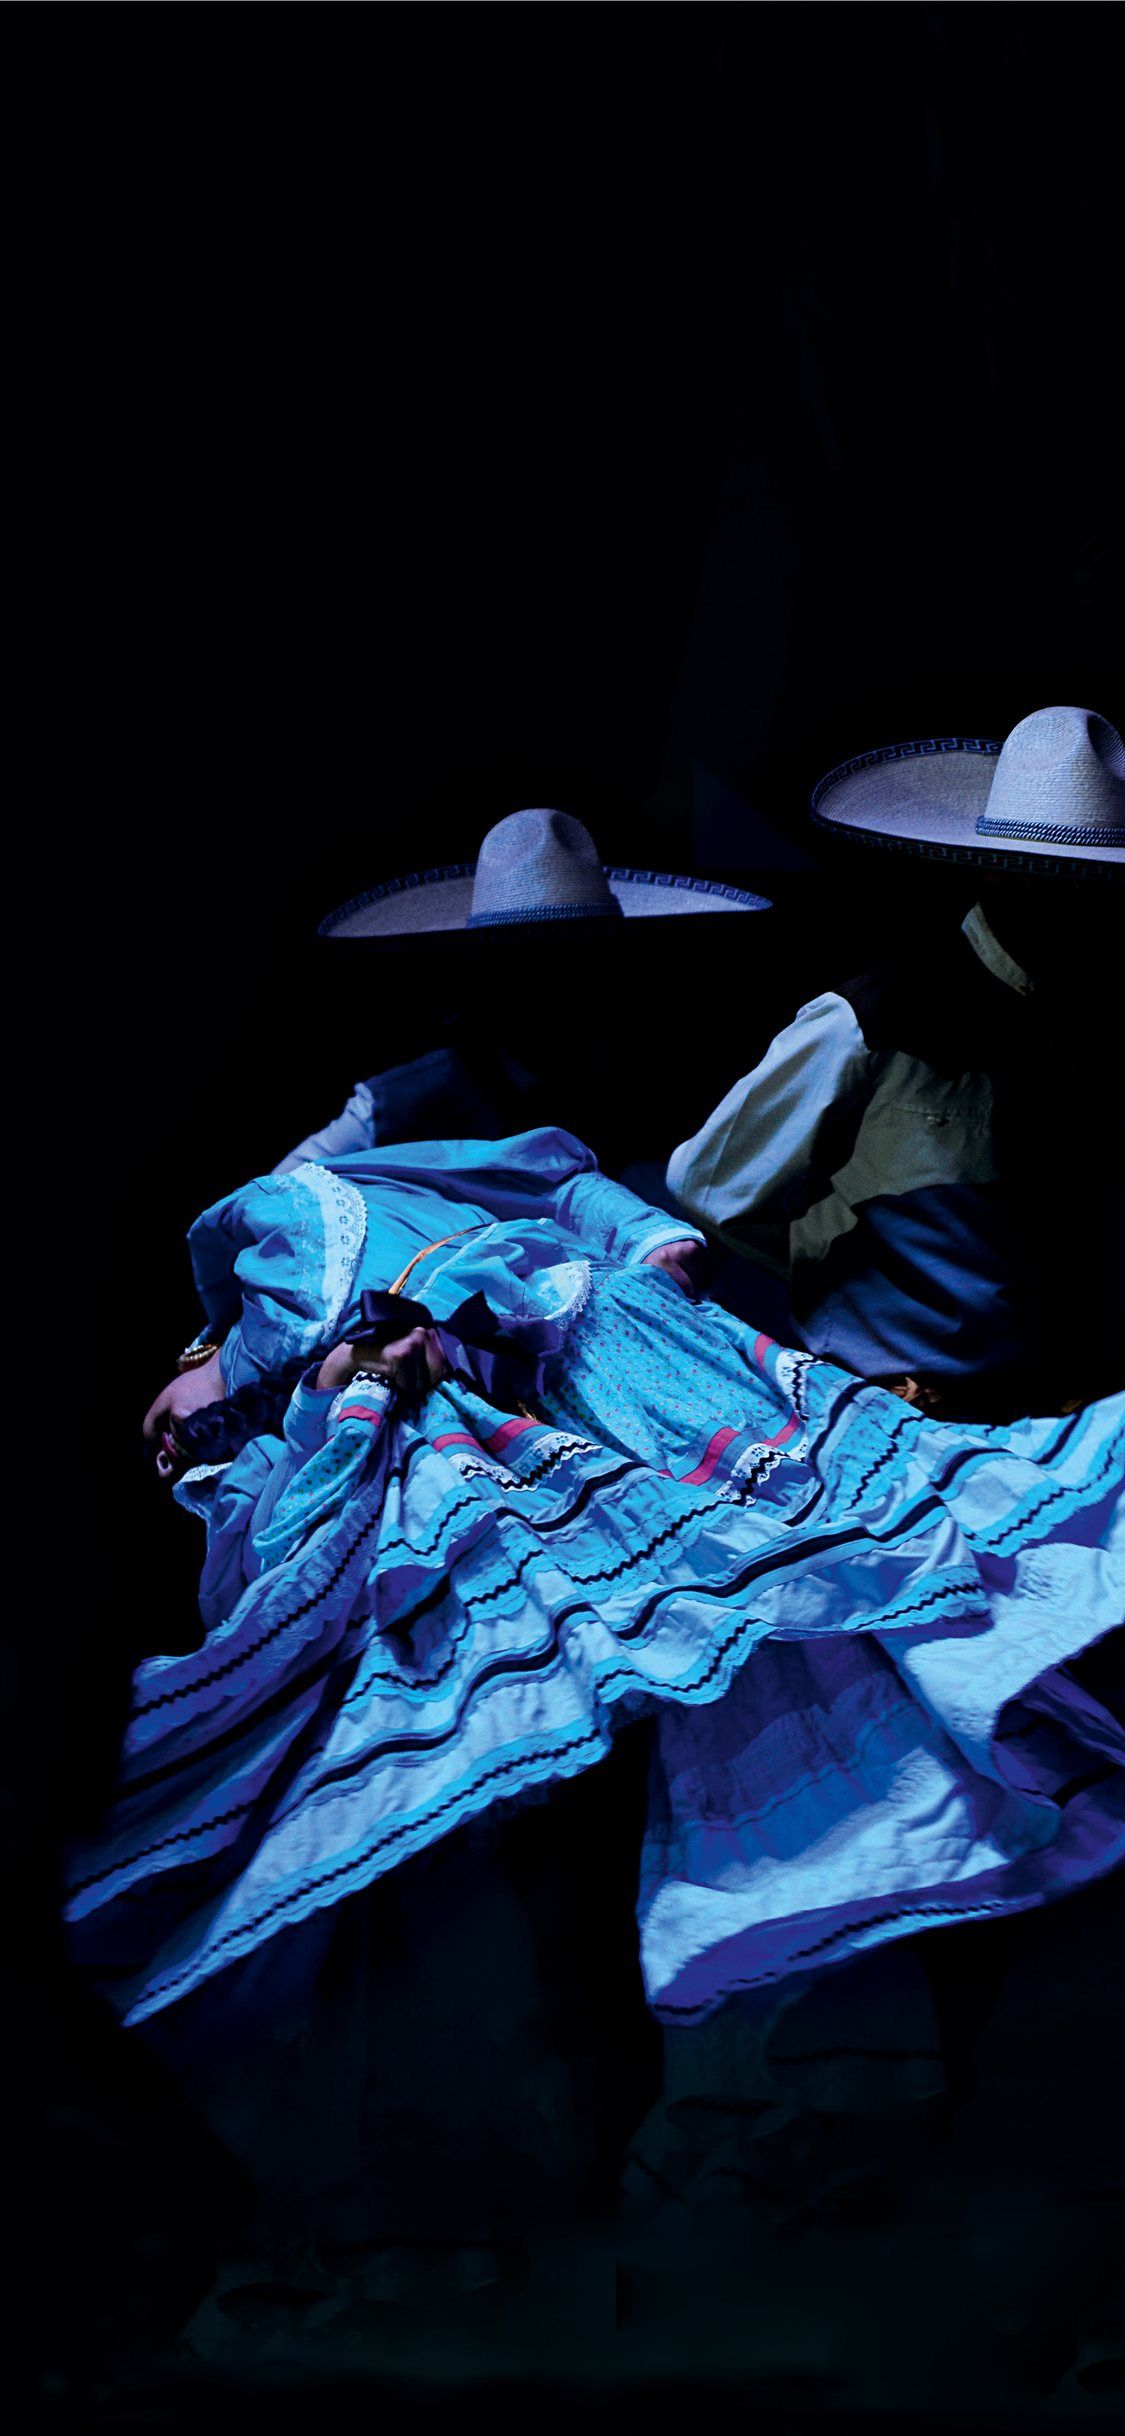 Folklore Dance México iPhone X Wallpaper Free Download